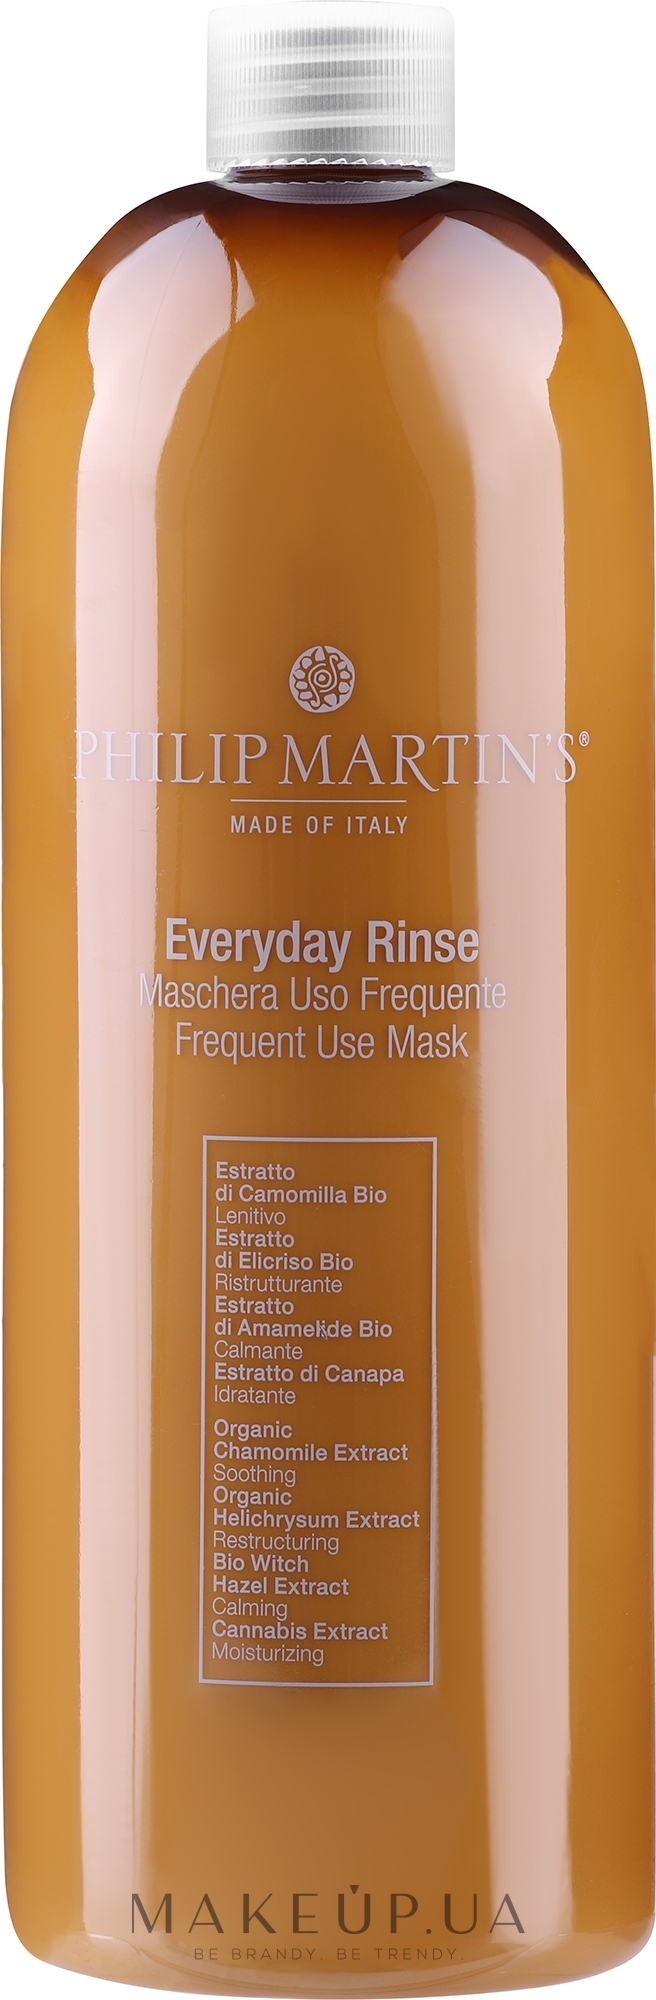 Маска для частого применения - Philip Martin's Everyday Rinse Frequent Use Mask — фото 1000ml